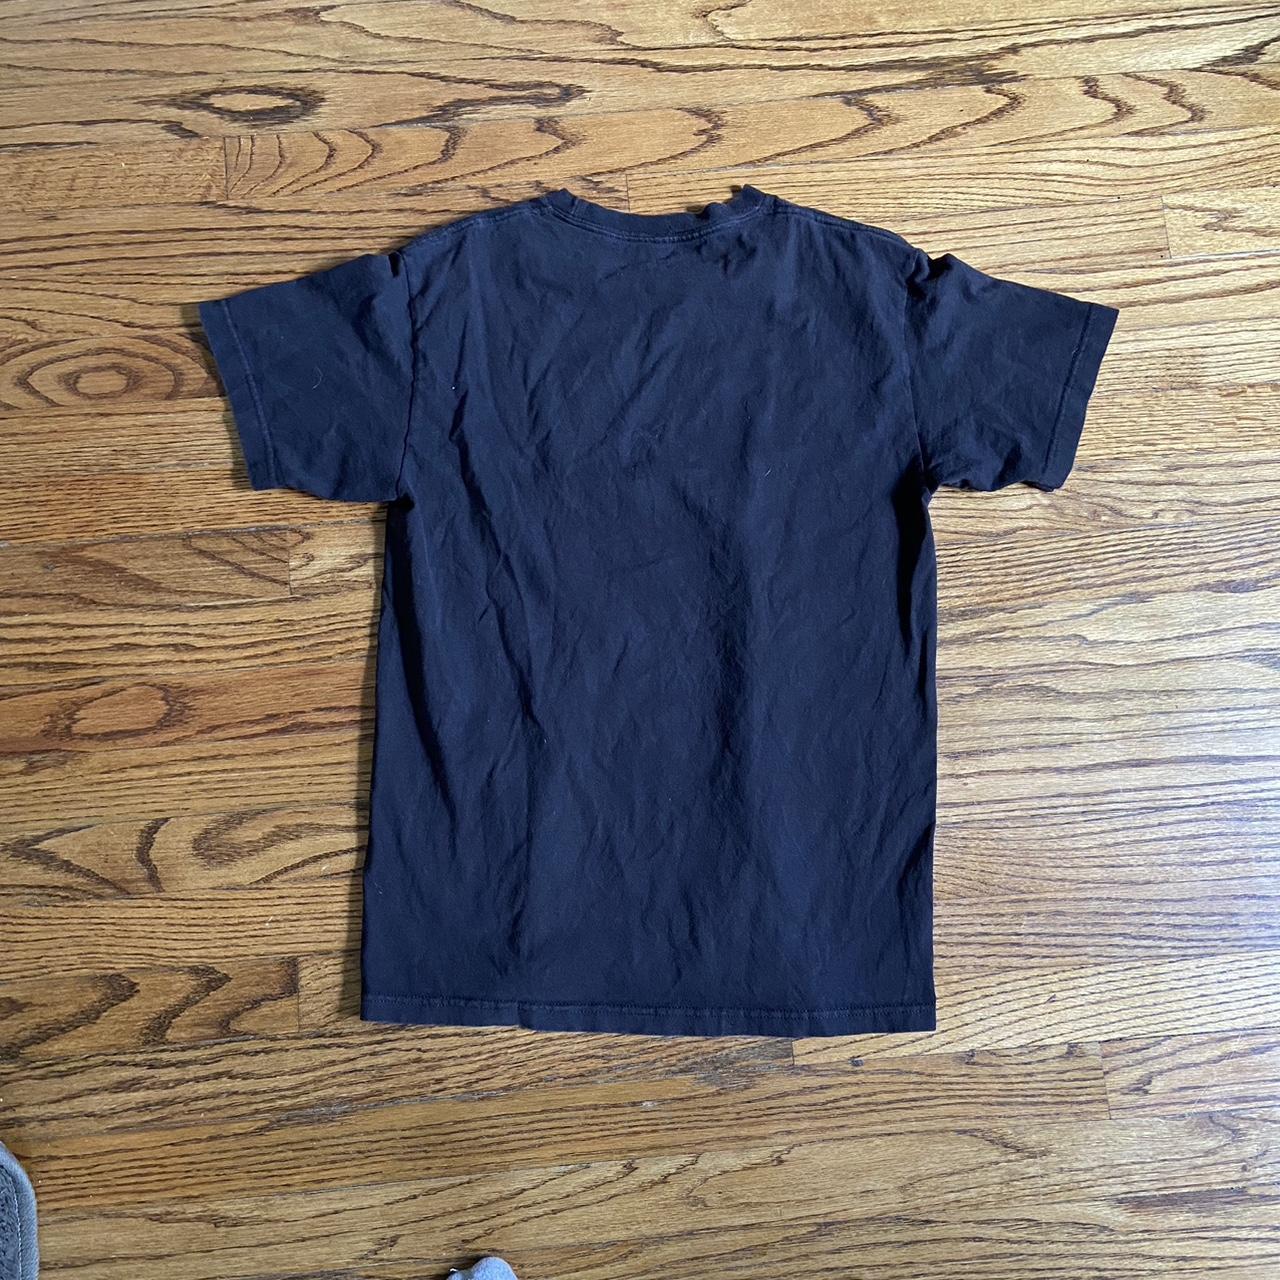 GX1000 t shirt Size medium - Depop